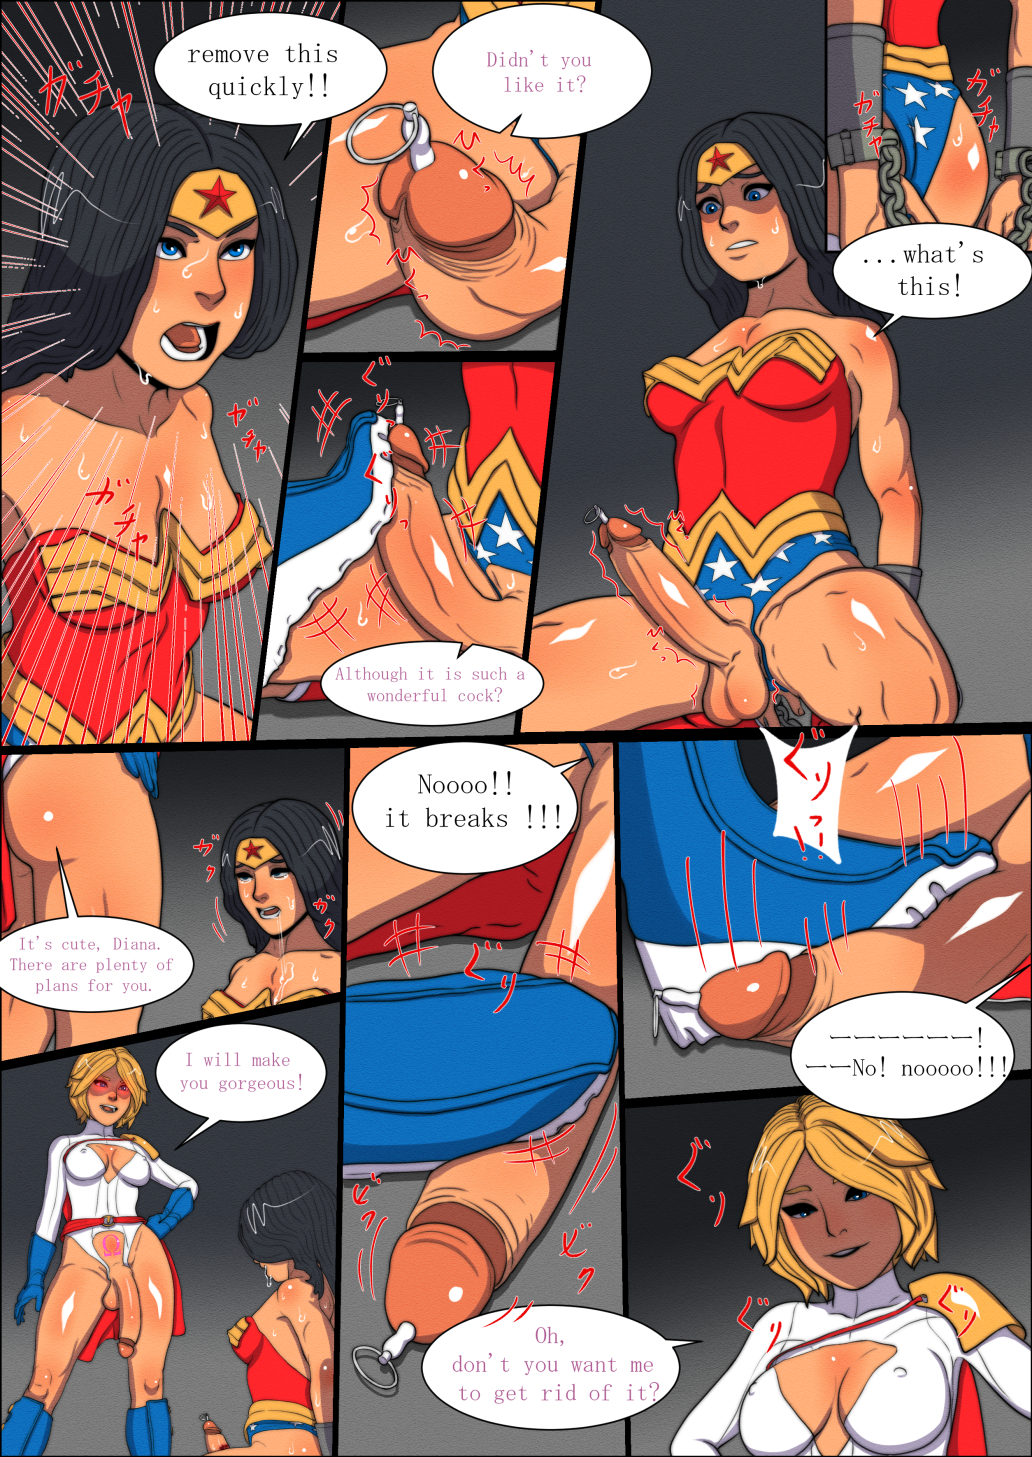 best of Wonder woman power girl comics